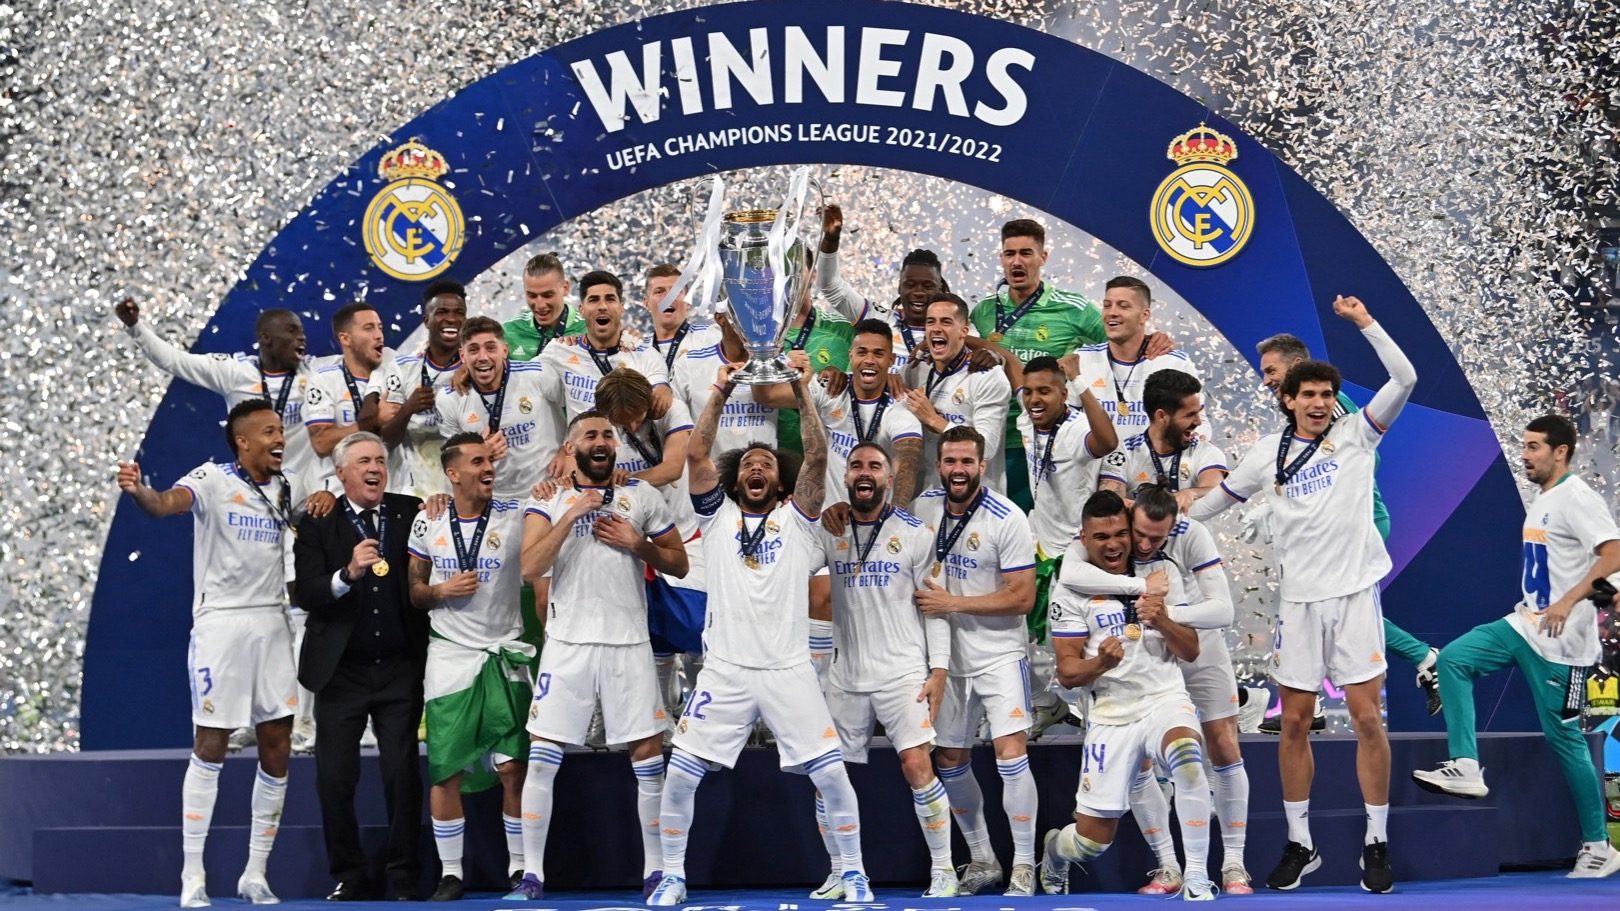 Champions League winners list: all European champions